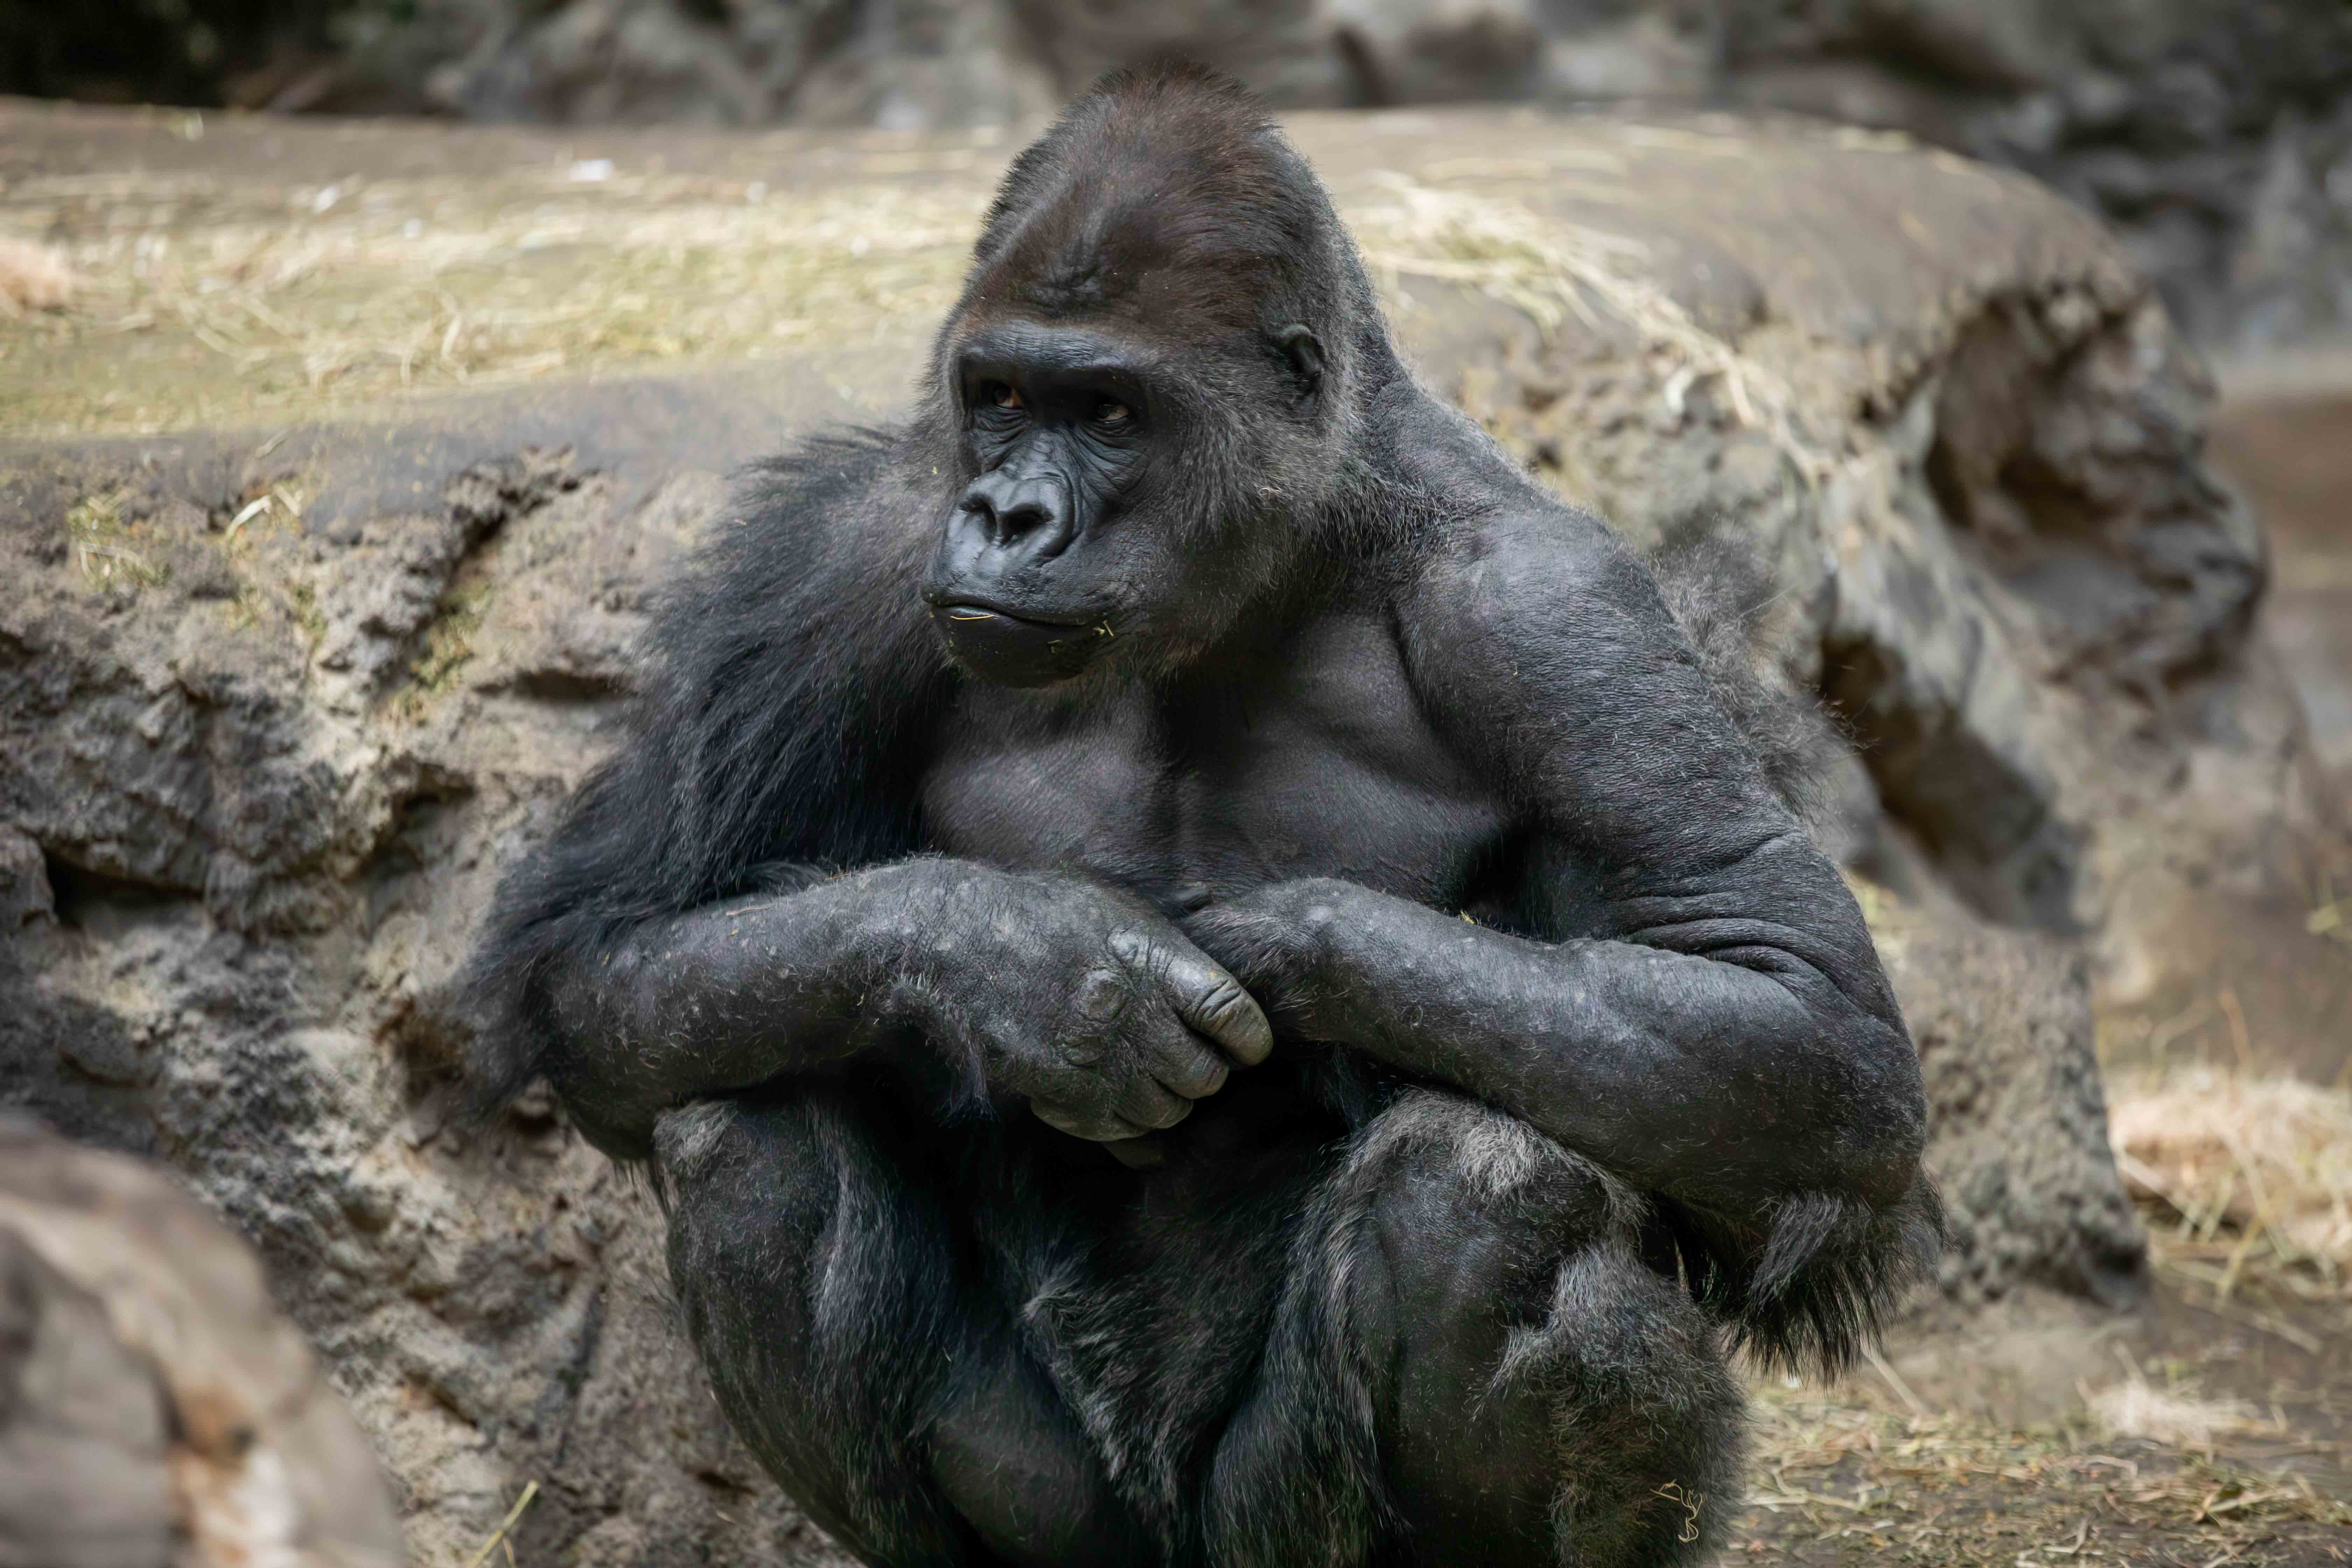 Buffalo Zoo Mourns Loss of Male Silverback Gorilla, Koga